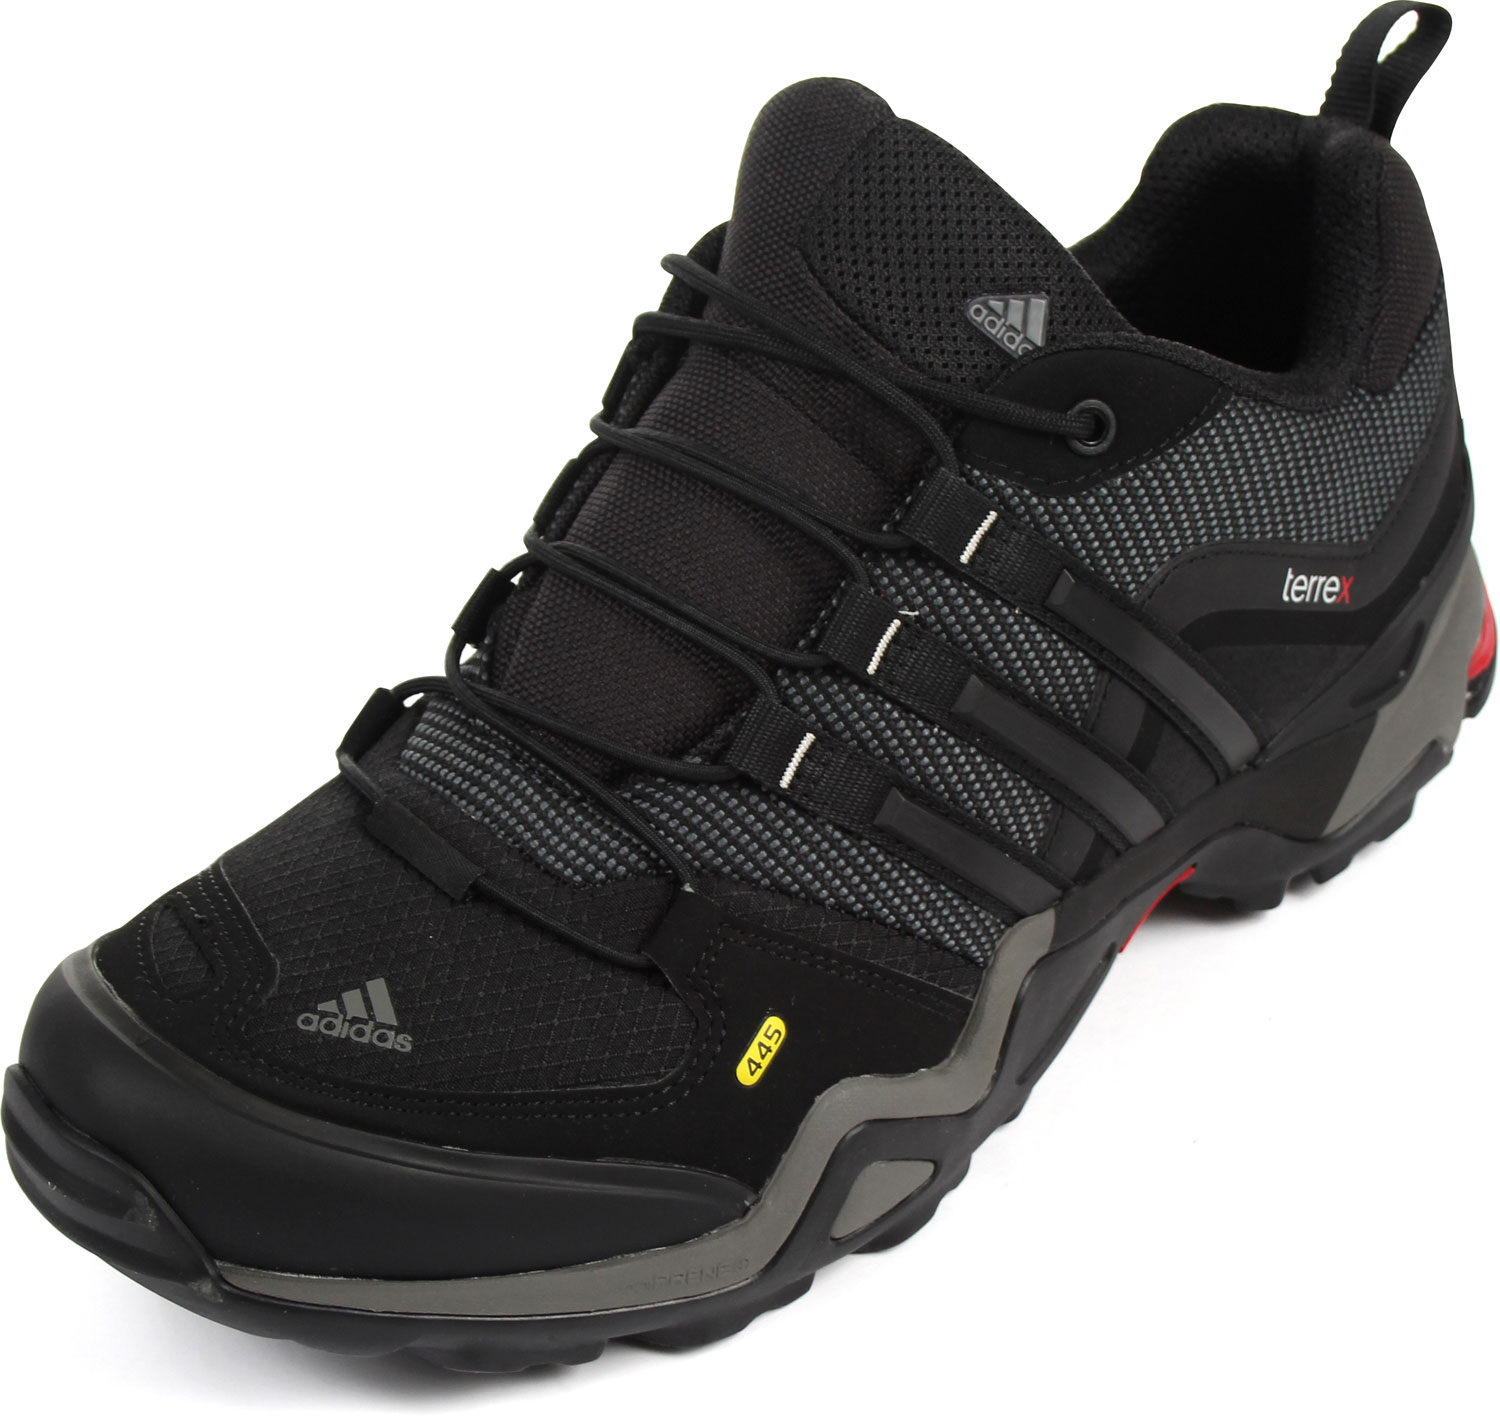 Adidas - Mens Terrex Fast X Hiking Shoes